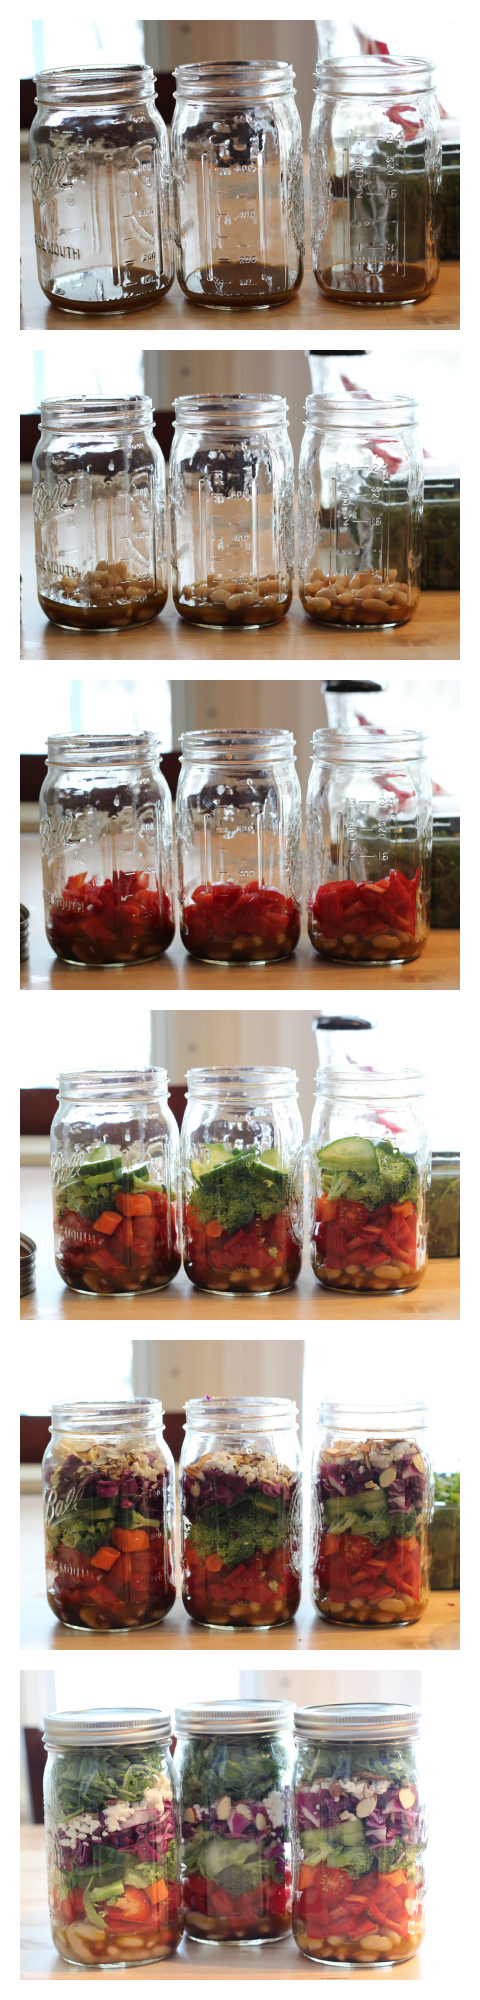 How to Assemble a Mason Jar Salad